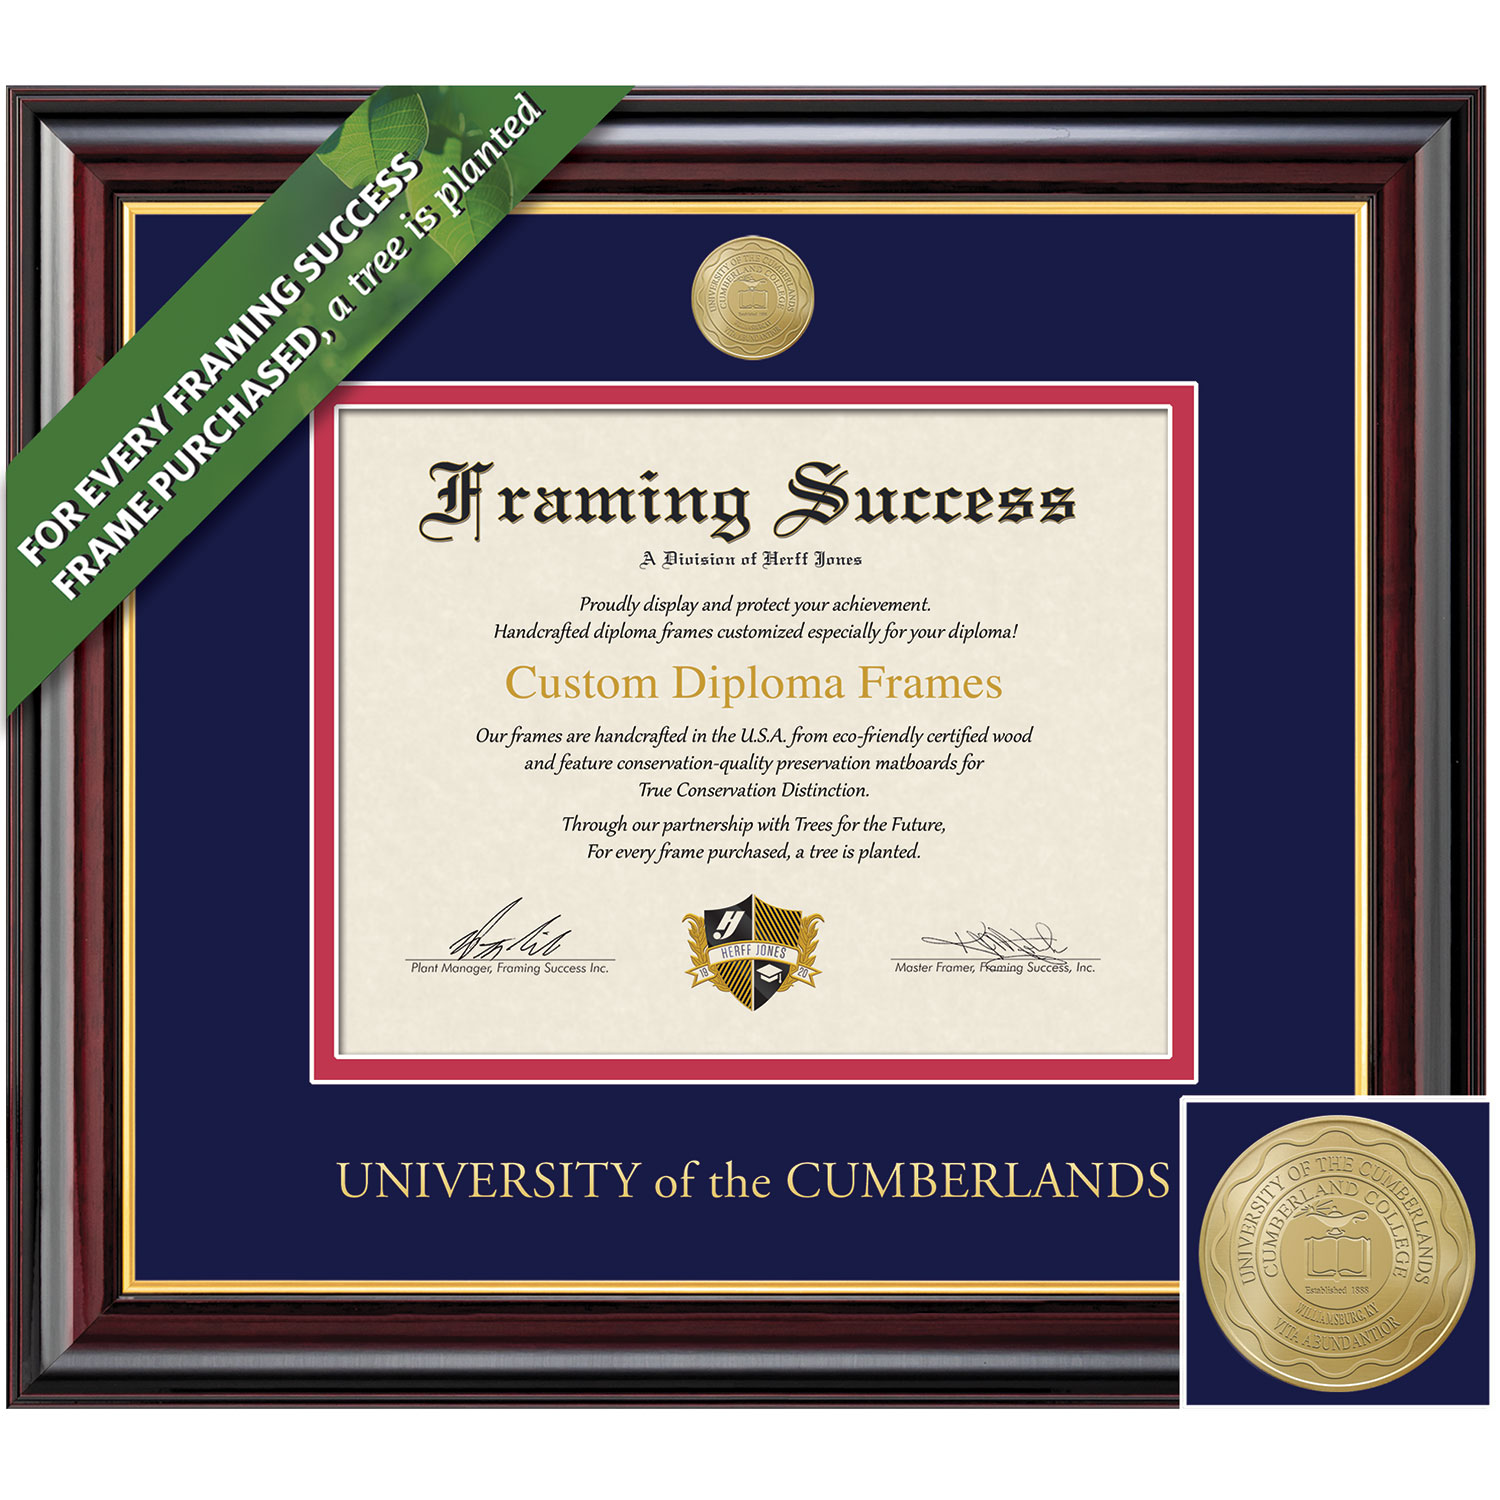 Framing Success 9 x 12 Windsor Gold Medallion Masters Diploma Frame